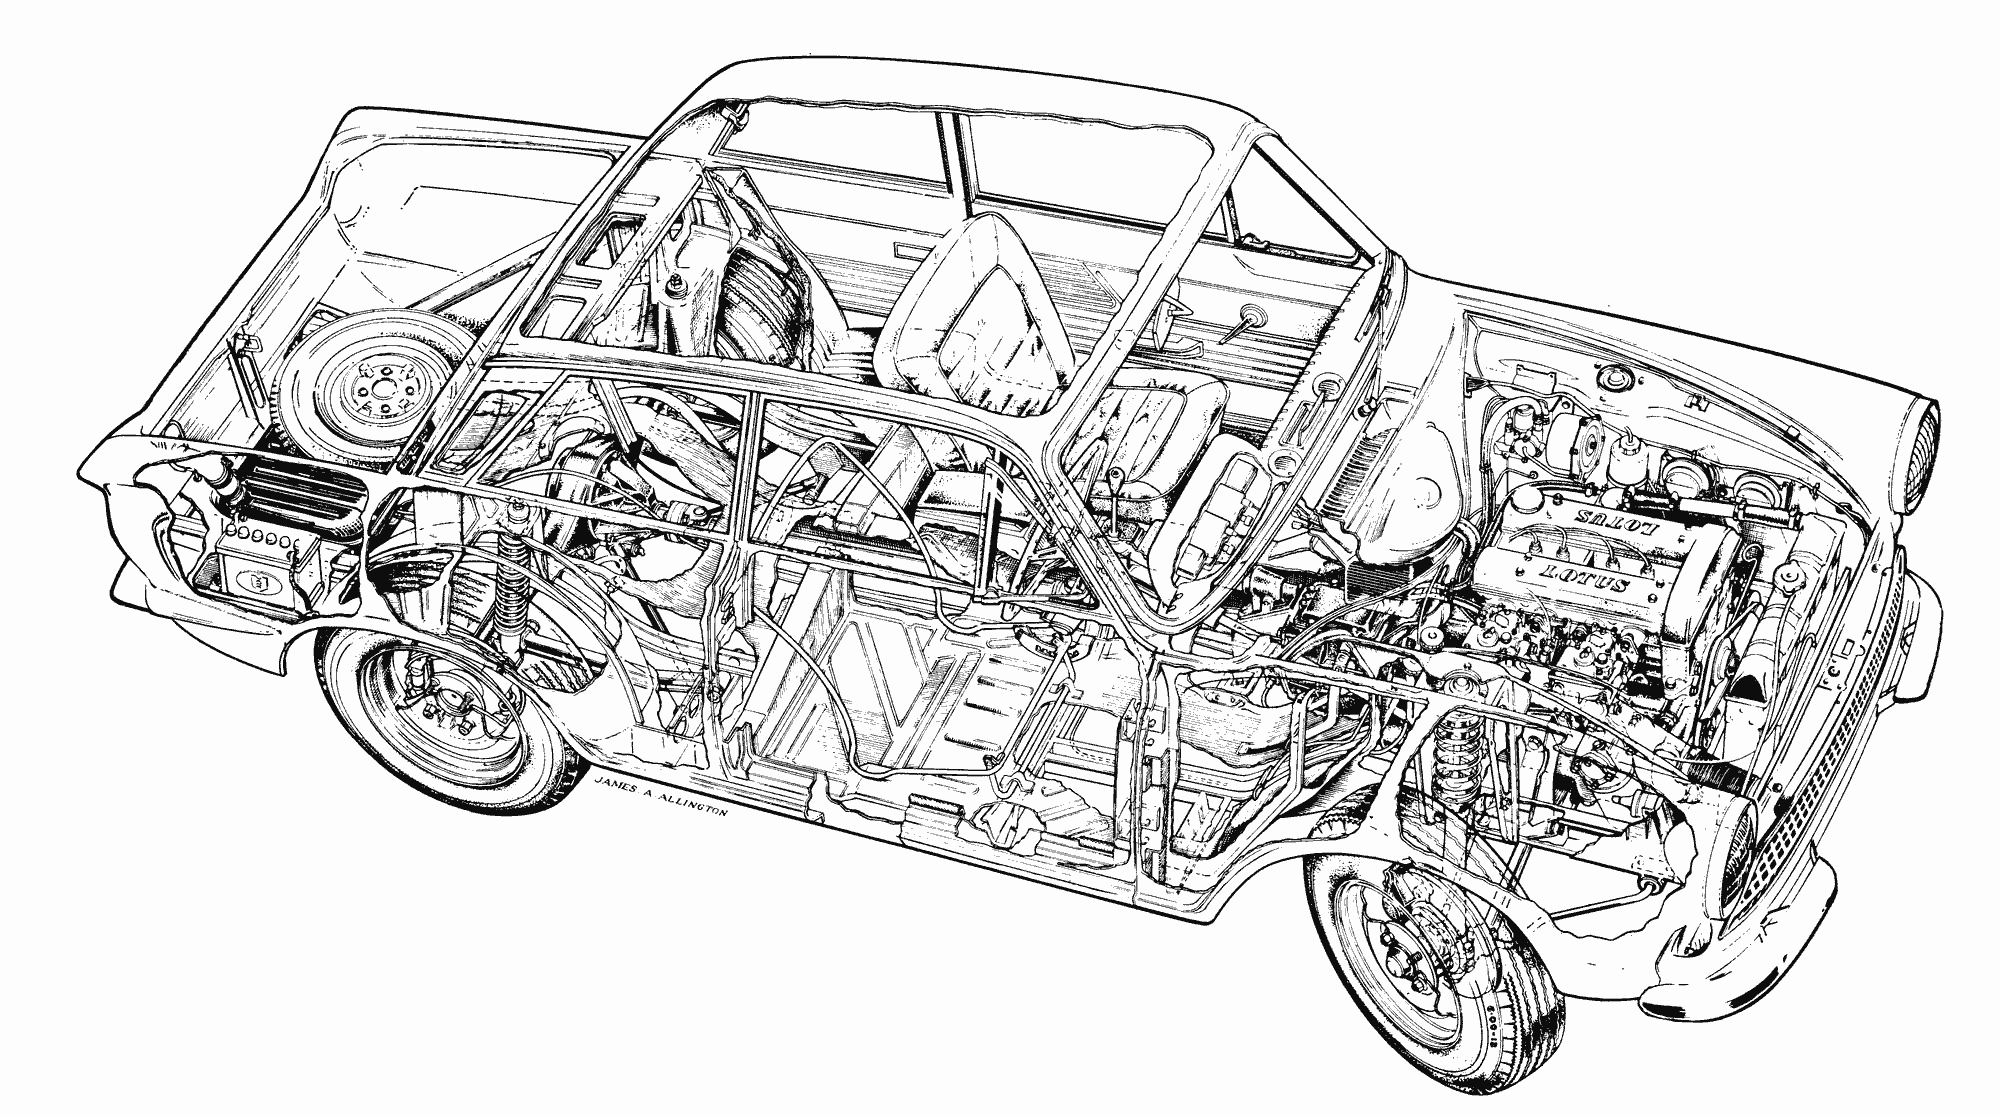 Lotus Cortina cutaway